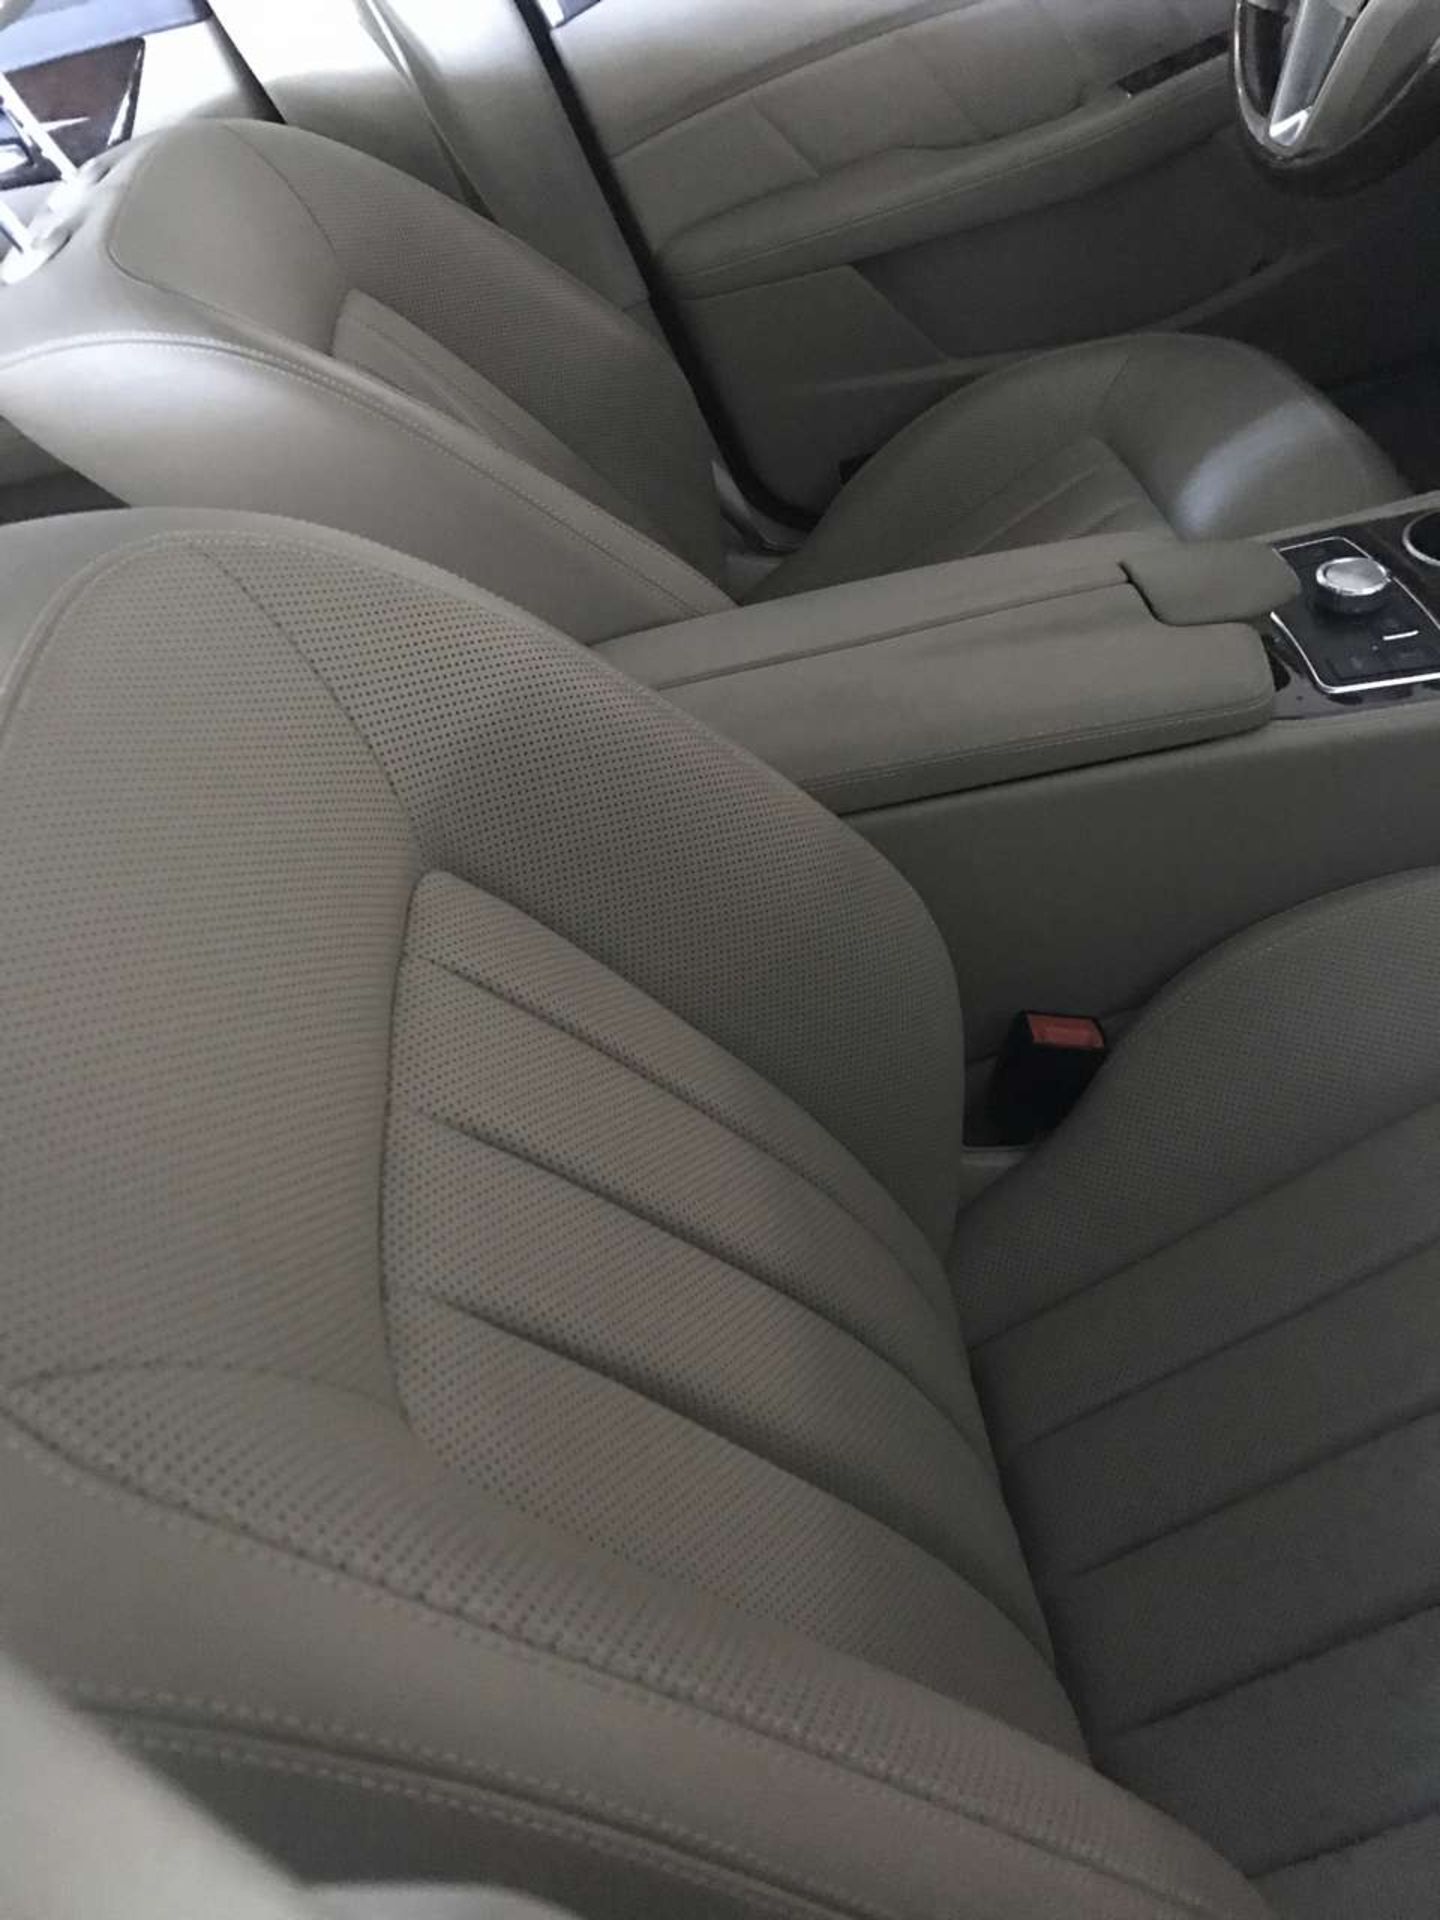 2012 Mercedes CLS550 Luxury Sedan 4-Door, AWD, V8, 72,760 Miles ***NOTE - $75.00 Title - Image 6 of 6